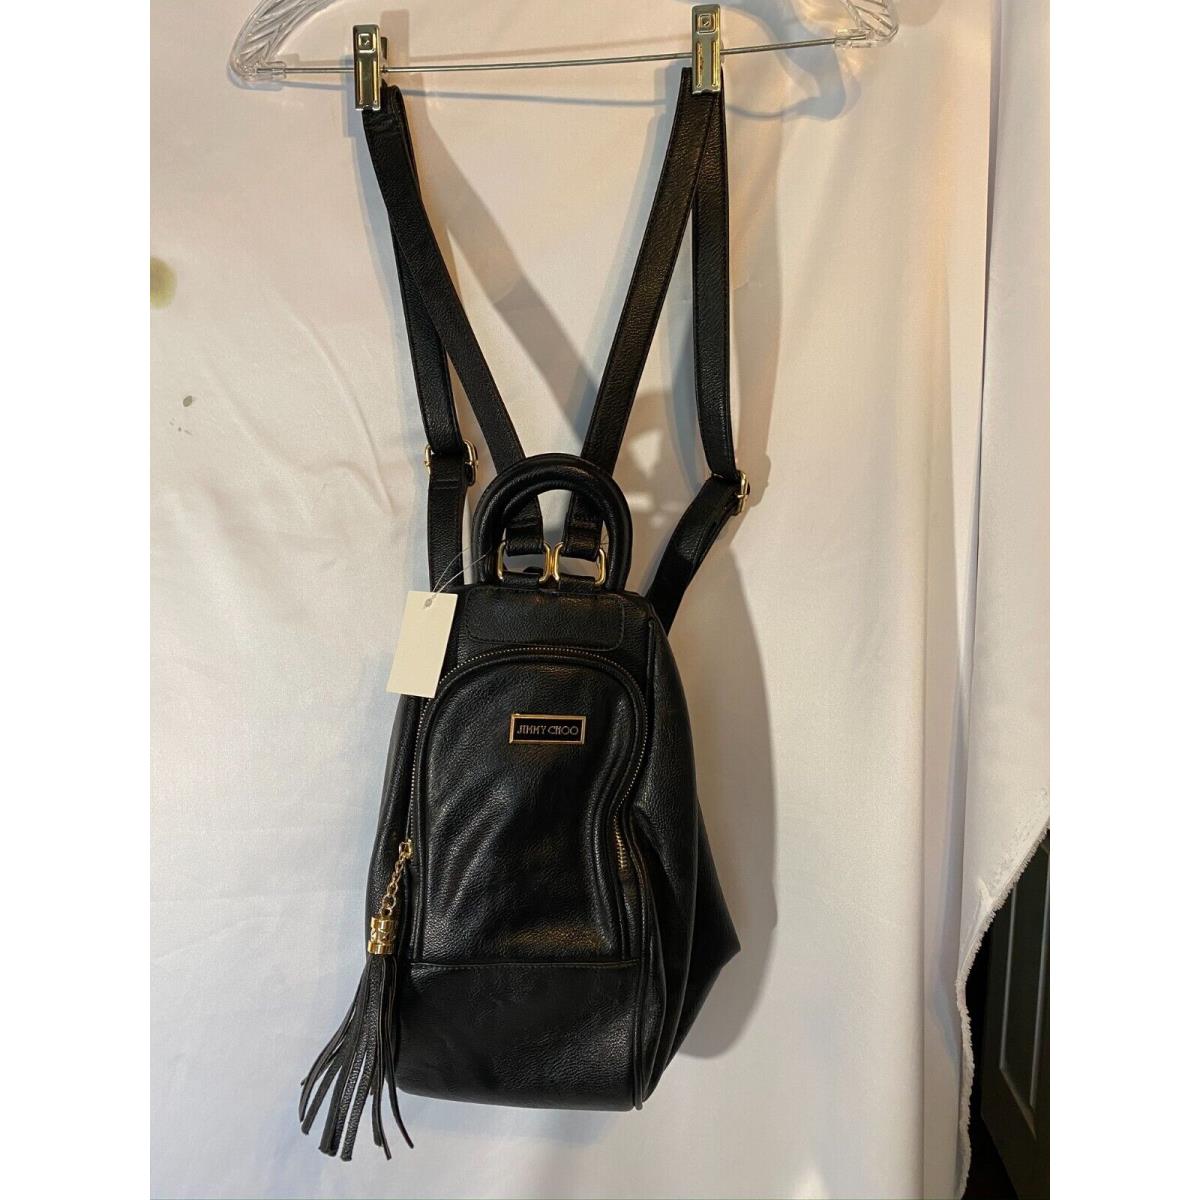 Jimmy Choo Black Leather Satchel Purse Backpack Bag